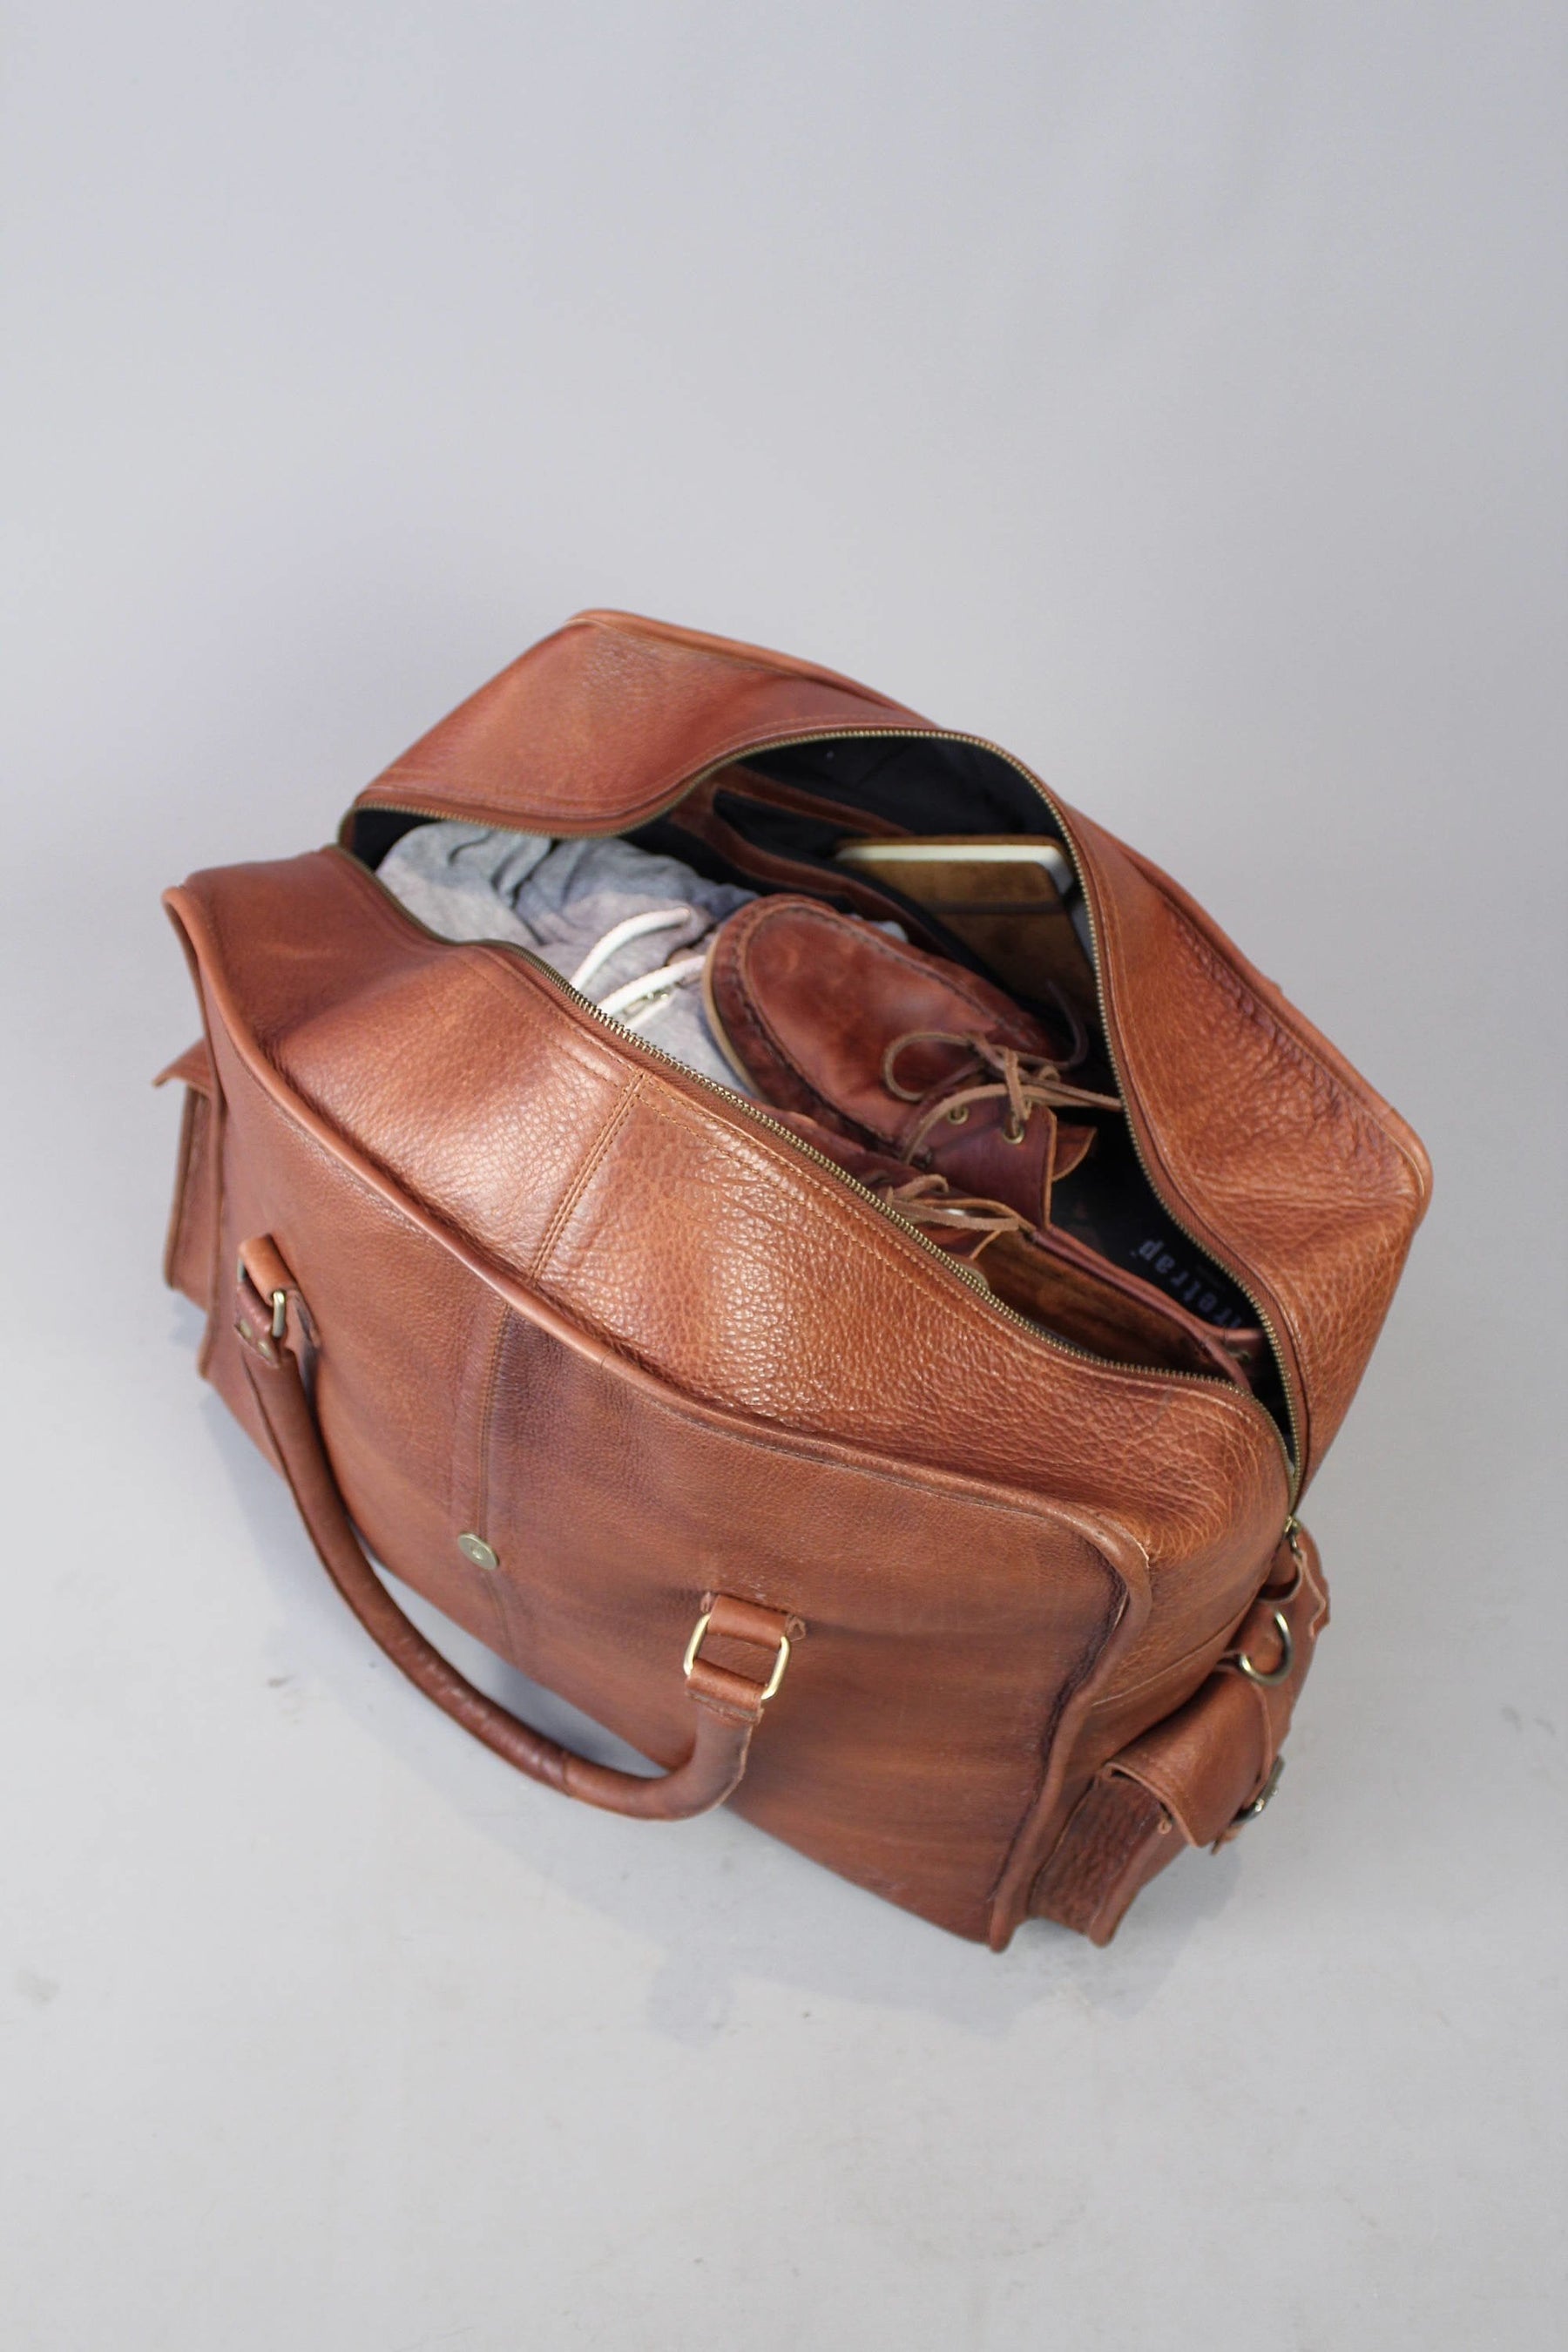 OES Travel Bag - Genuine Brown Leather - Bricks Masons